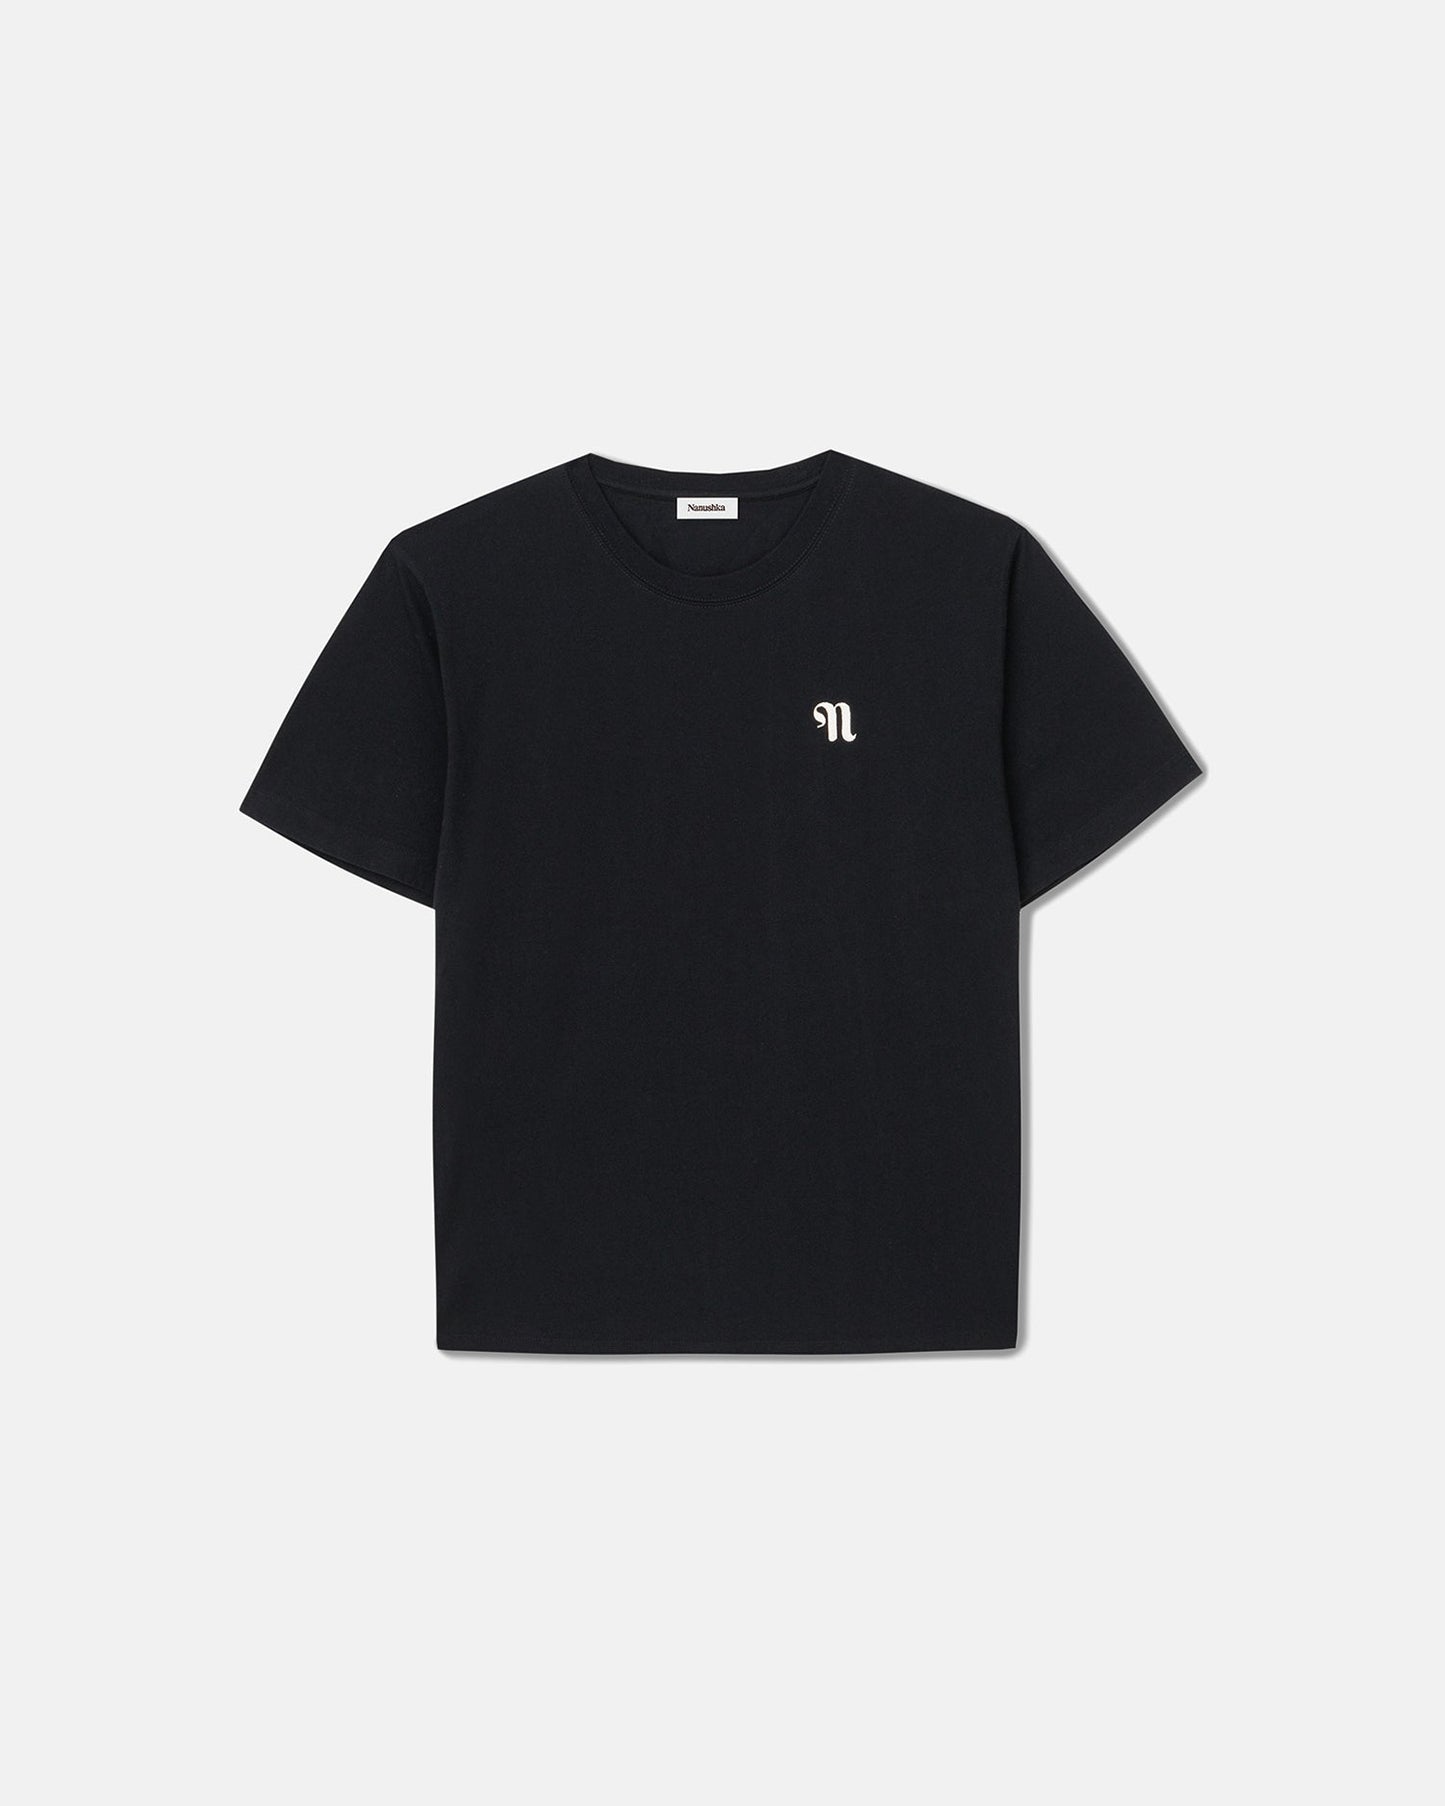 Reece - Organically Grown Cotton T-Shirt - Black